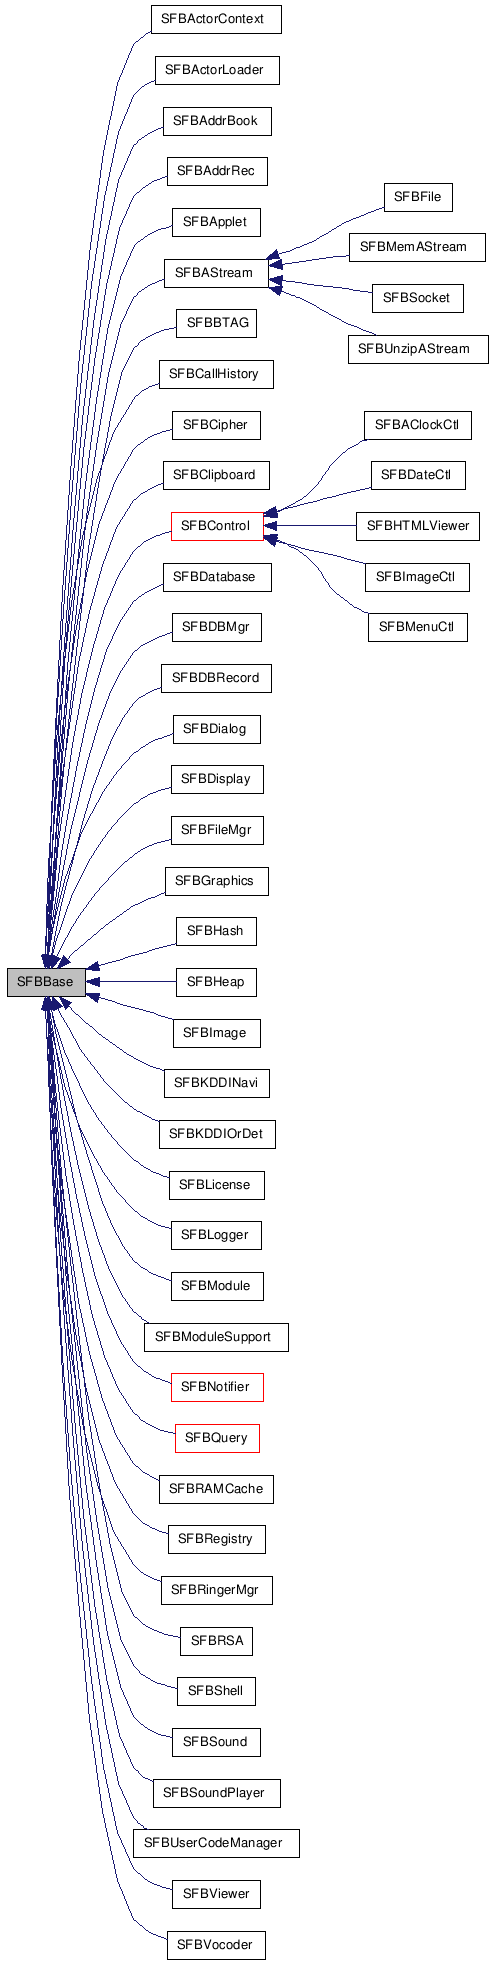  Inheritance diagram of SFBBaseClass